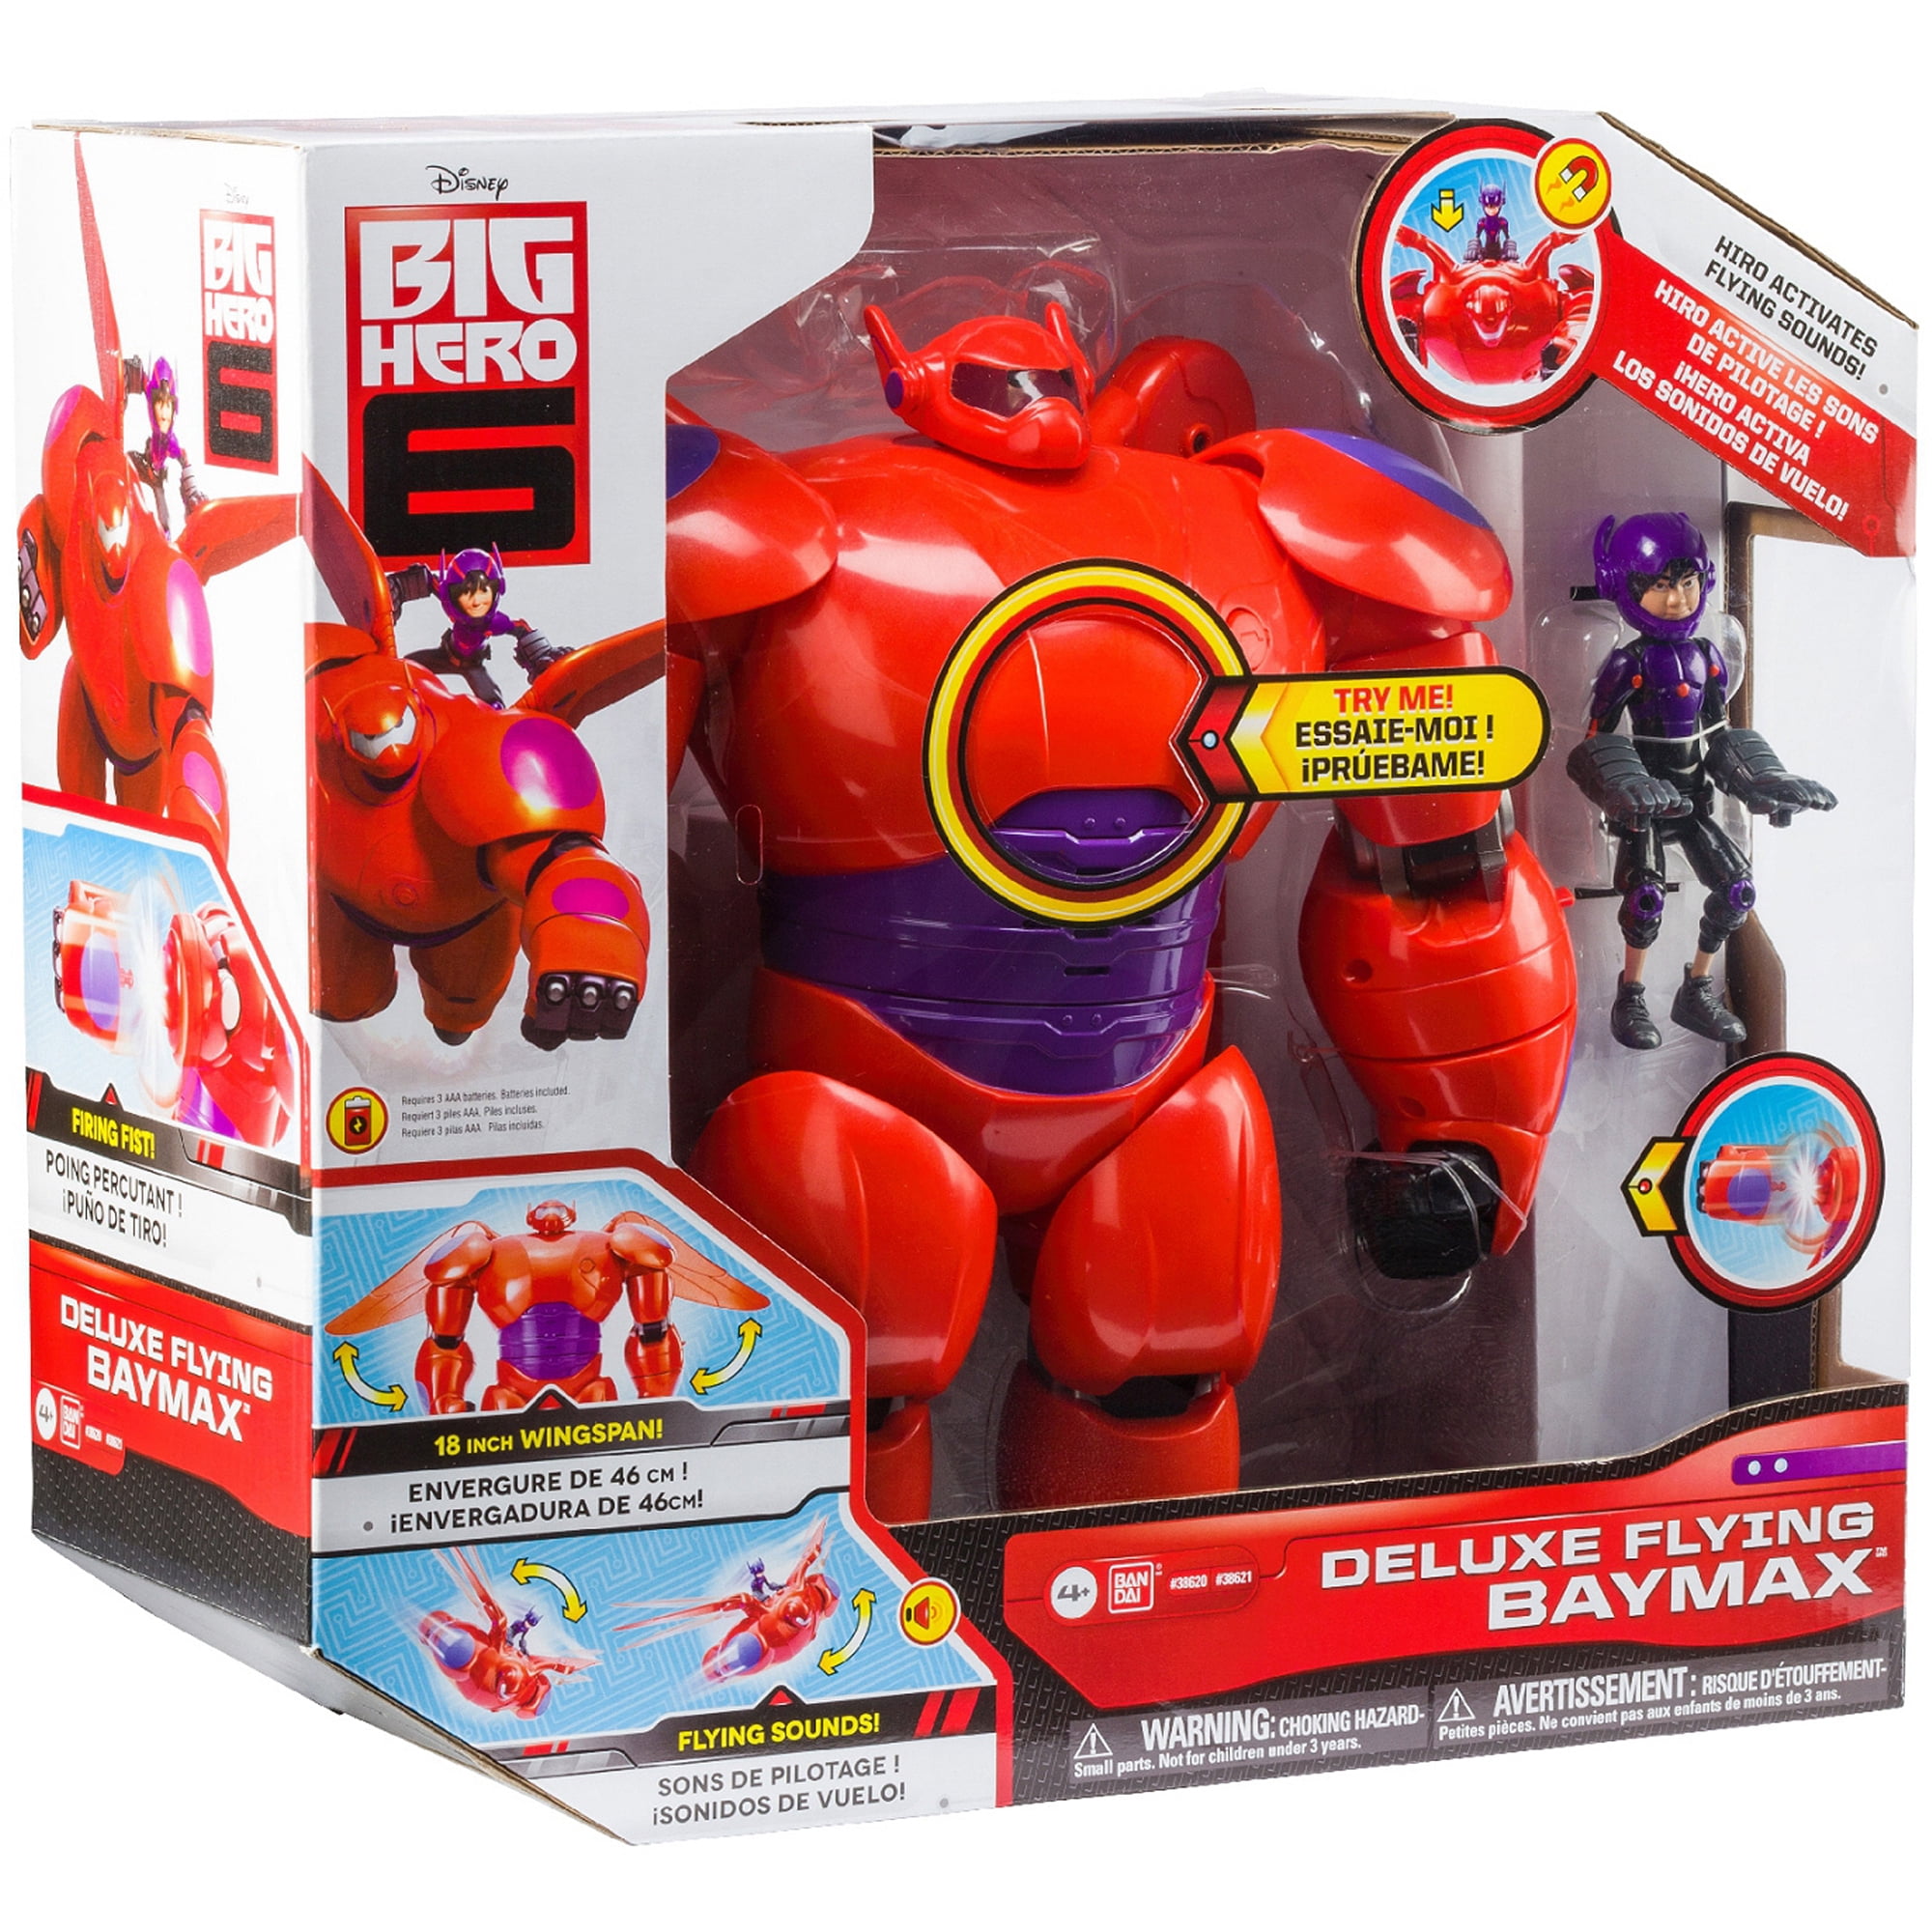 Toys & Hobbies Baymax Red Big Hero 6 12" Action Figure Bandai